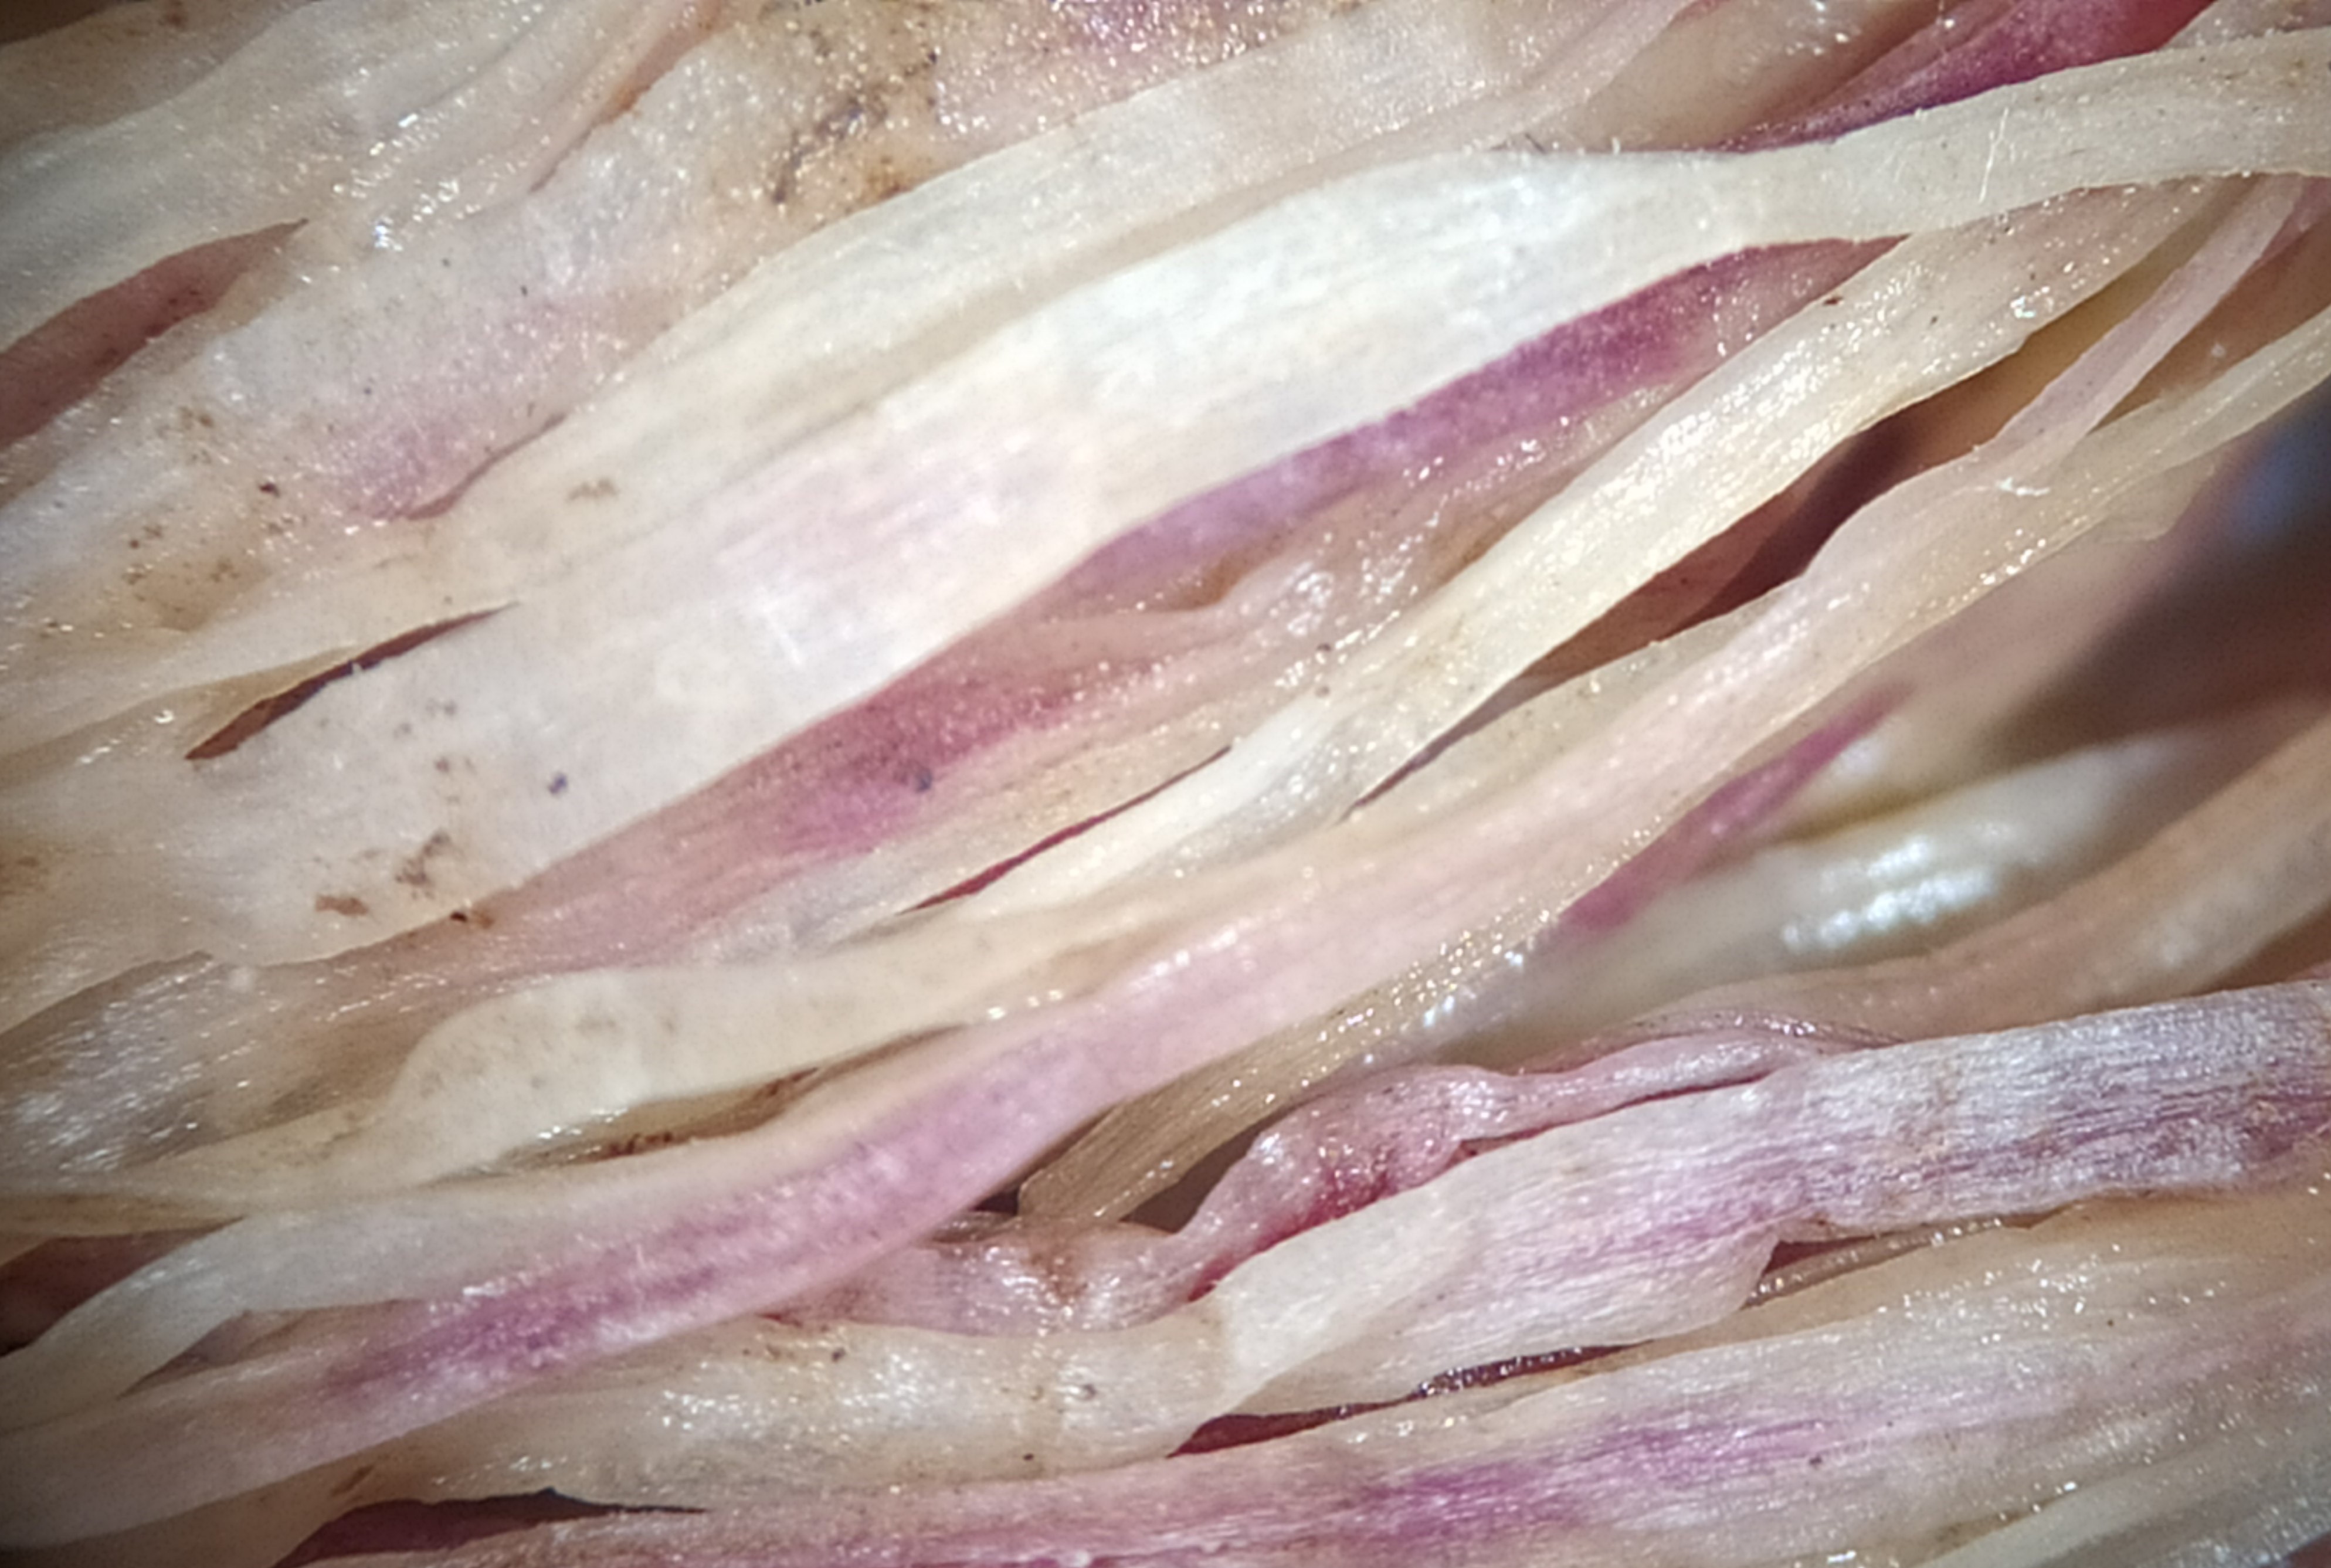 <p><b><p>Detalhe de raiz rosada em alho. </p></b></p><p>Autor: Ricardo J. Domingues</p>